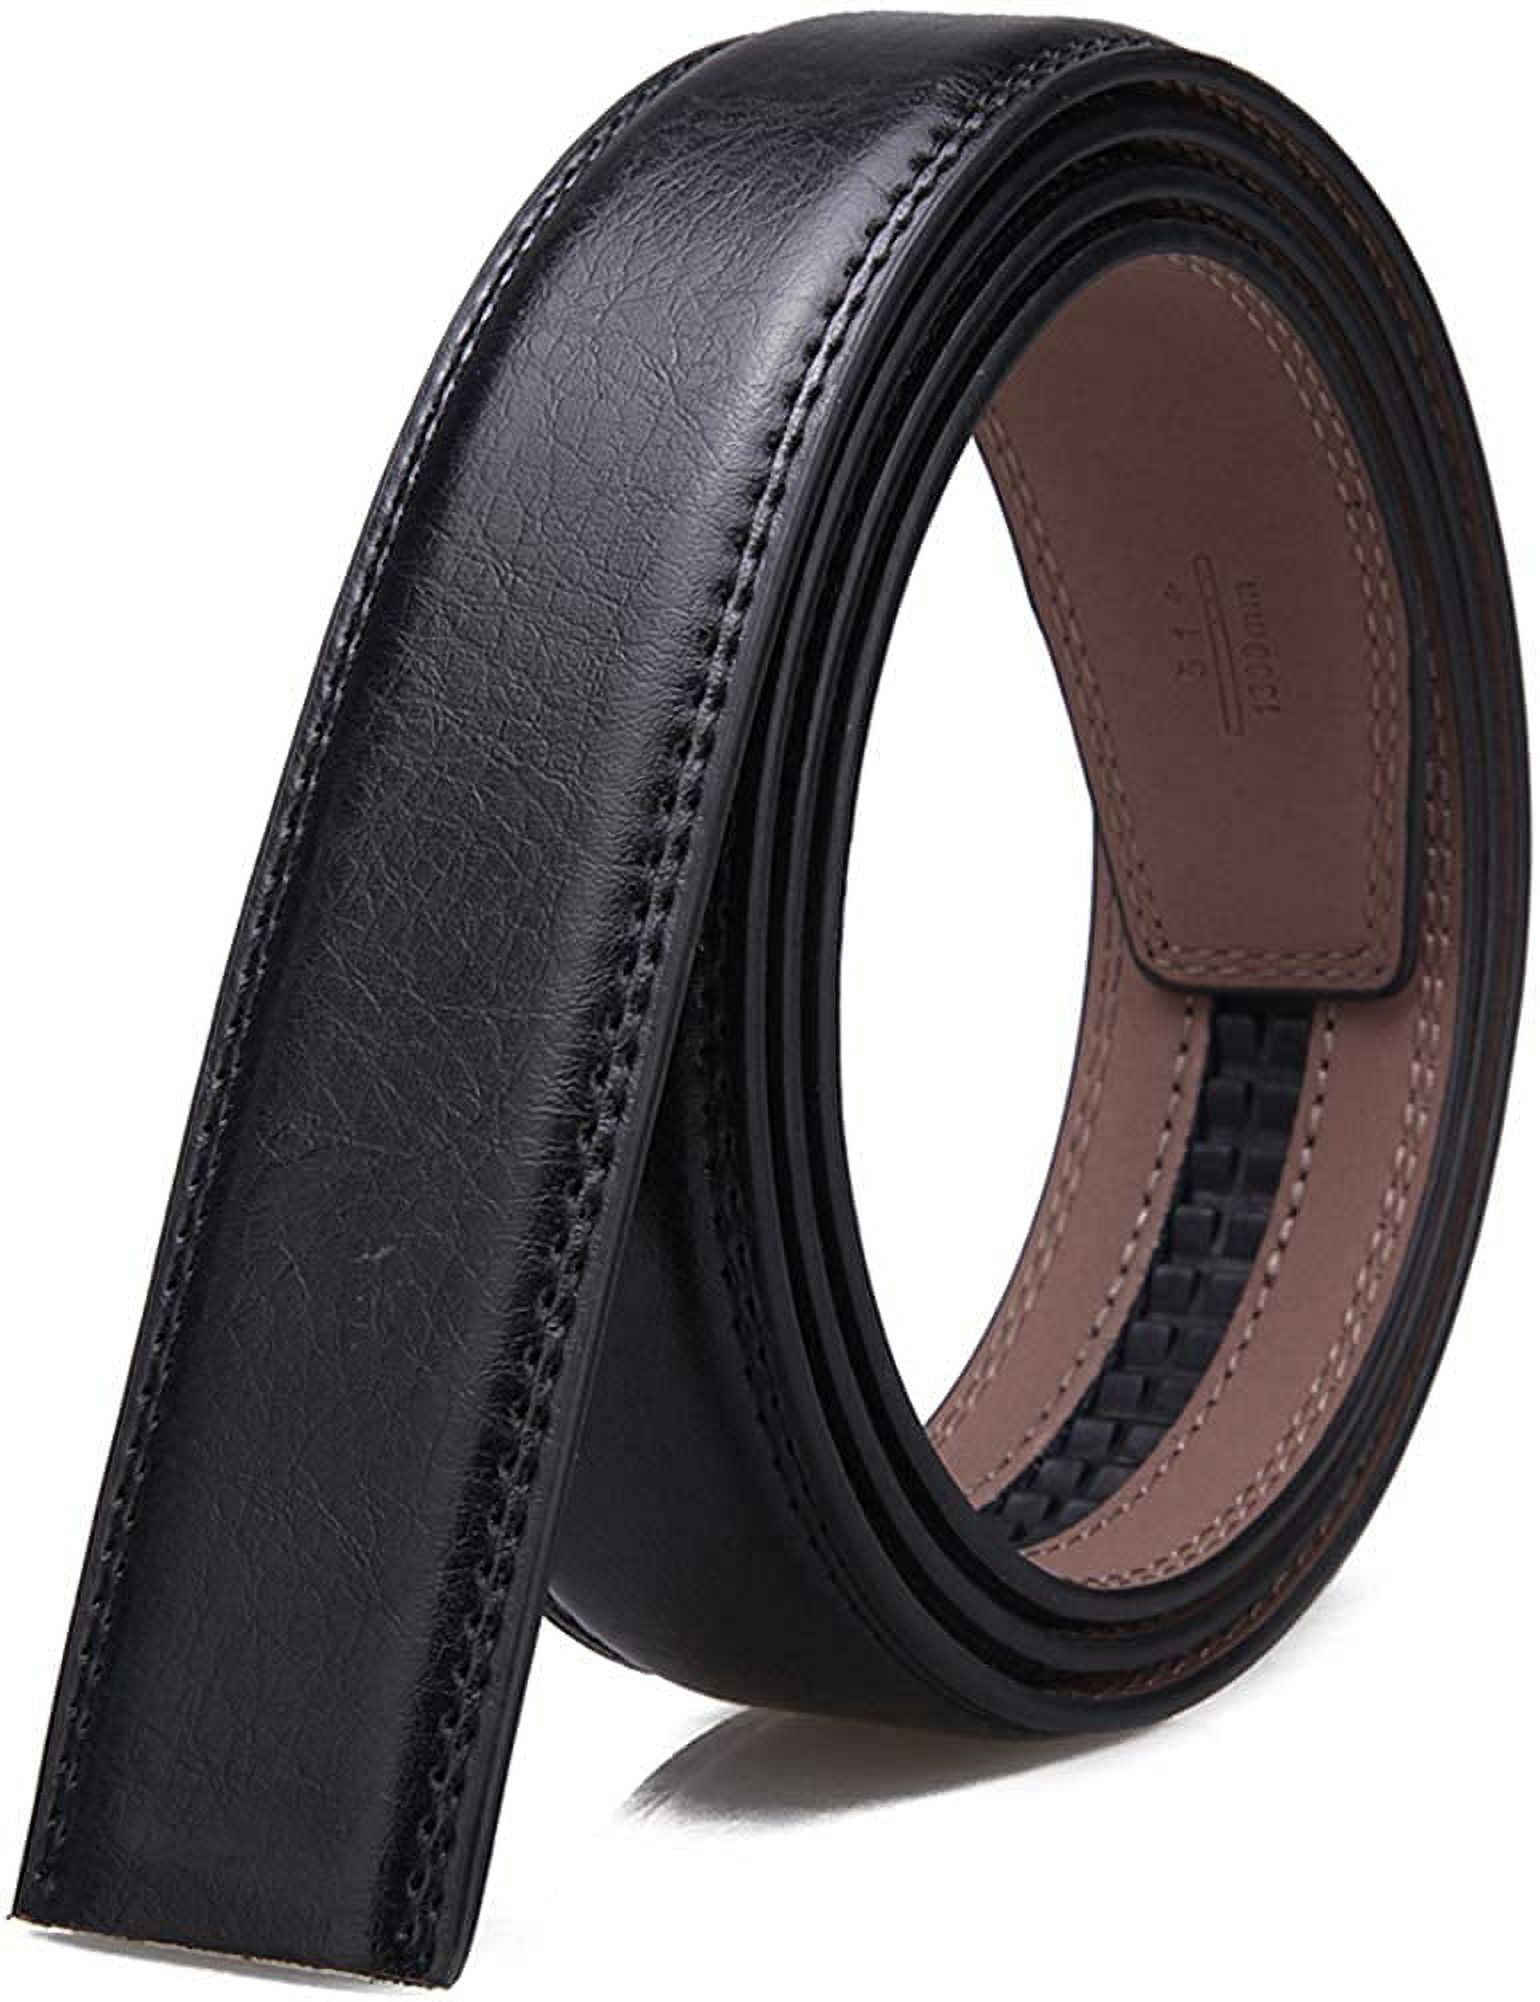  DJCAIZYY 1 3/8 (35mm) Reversible Belt Buckle